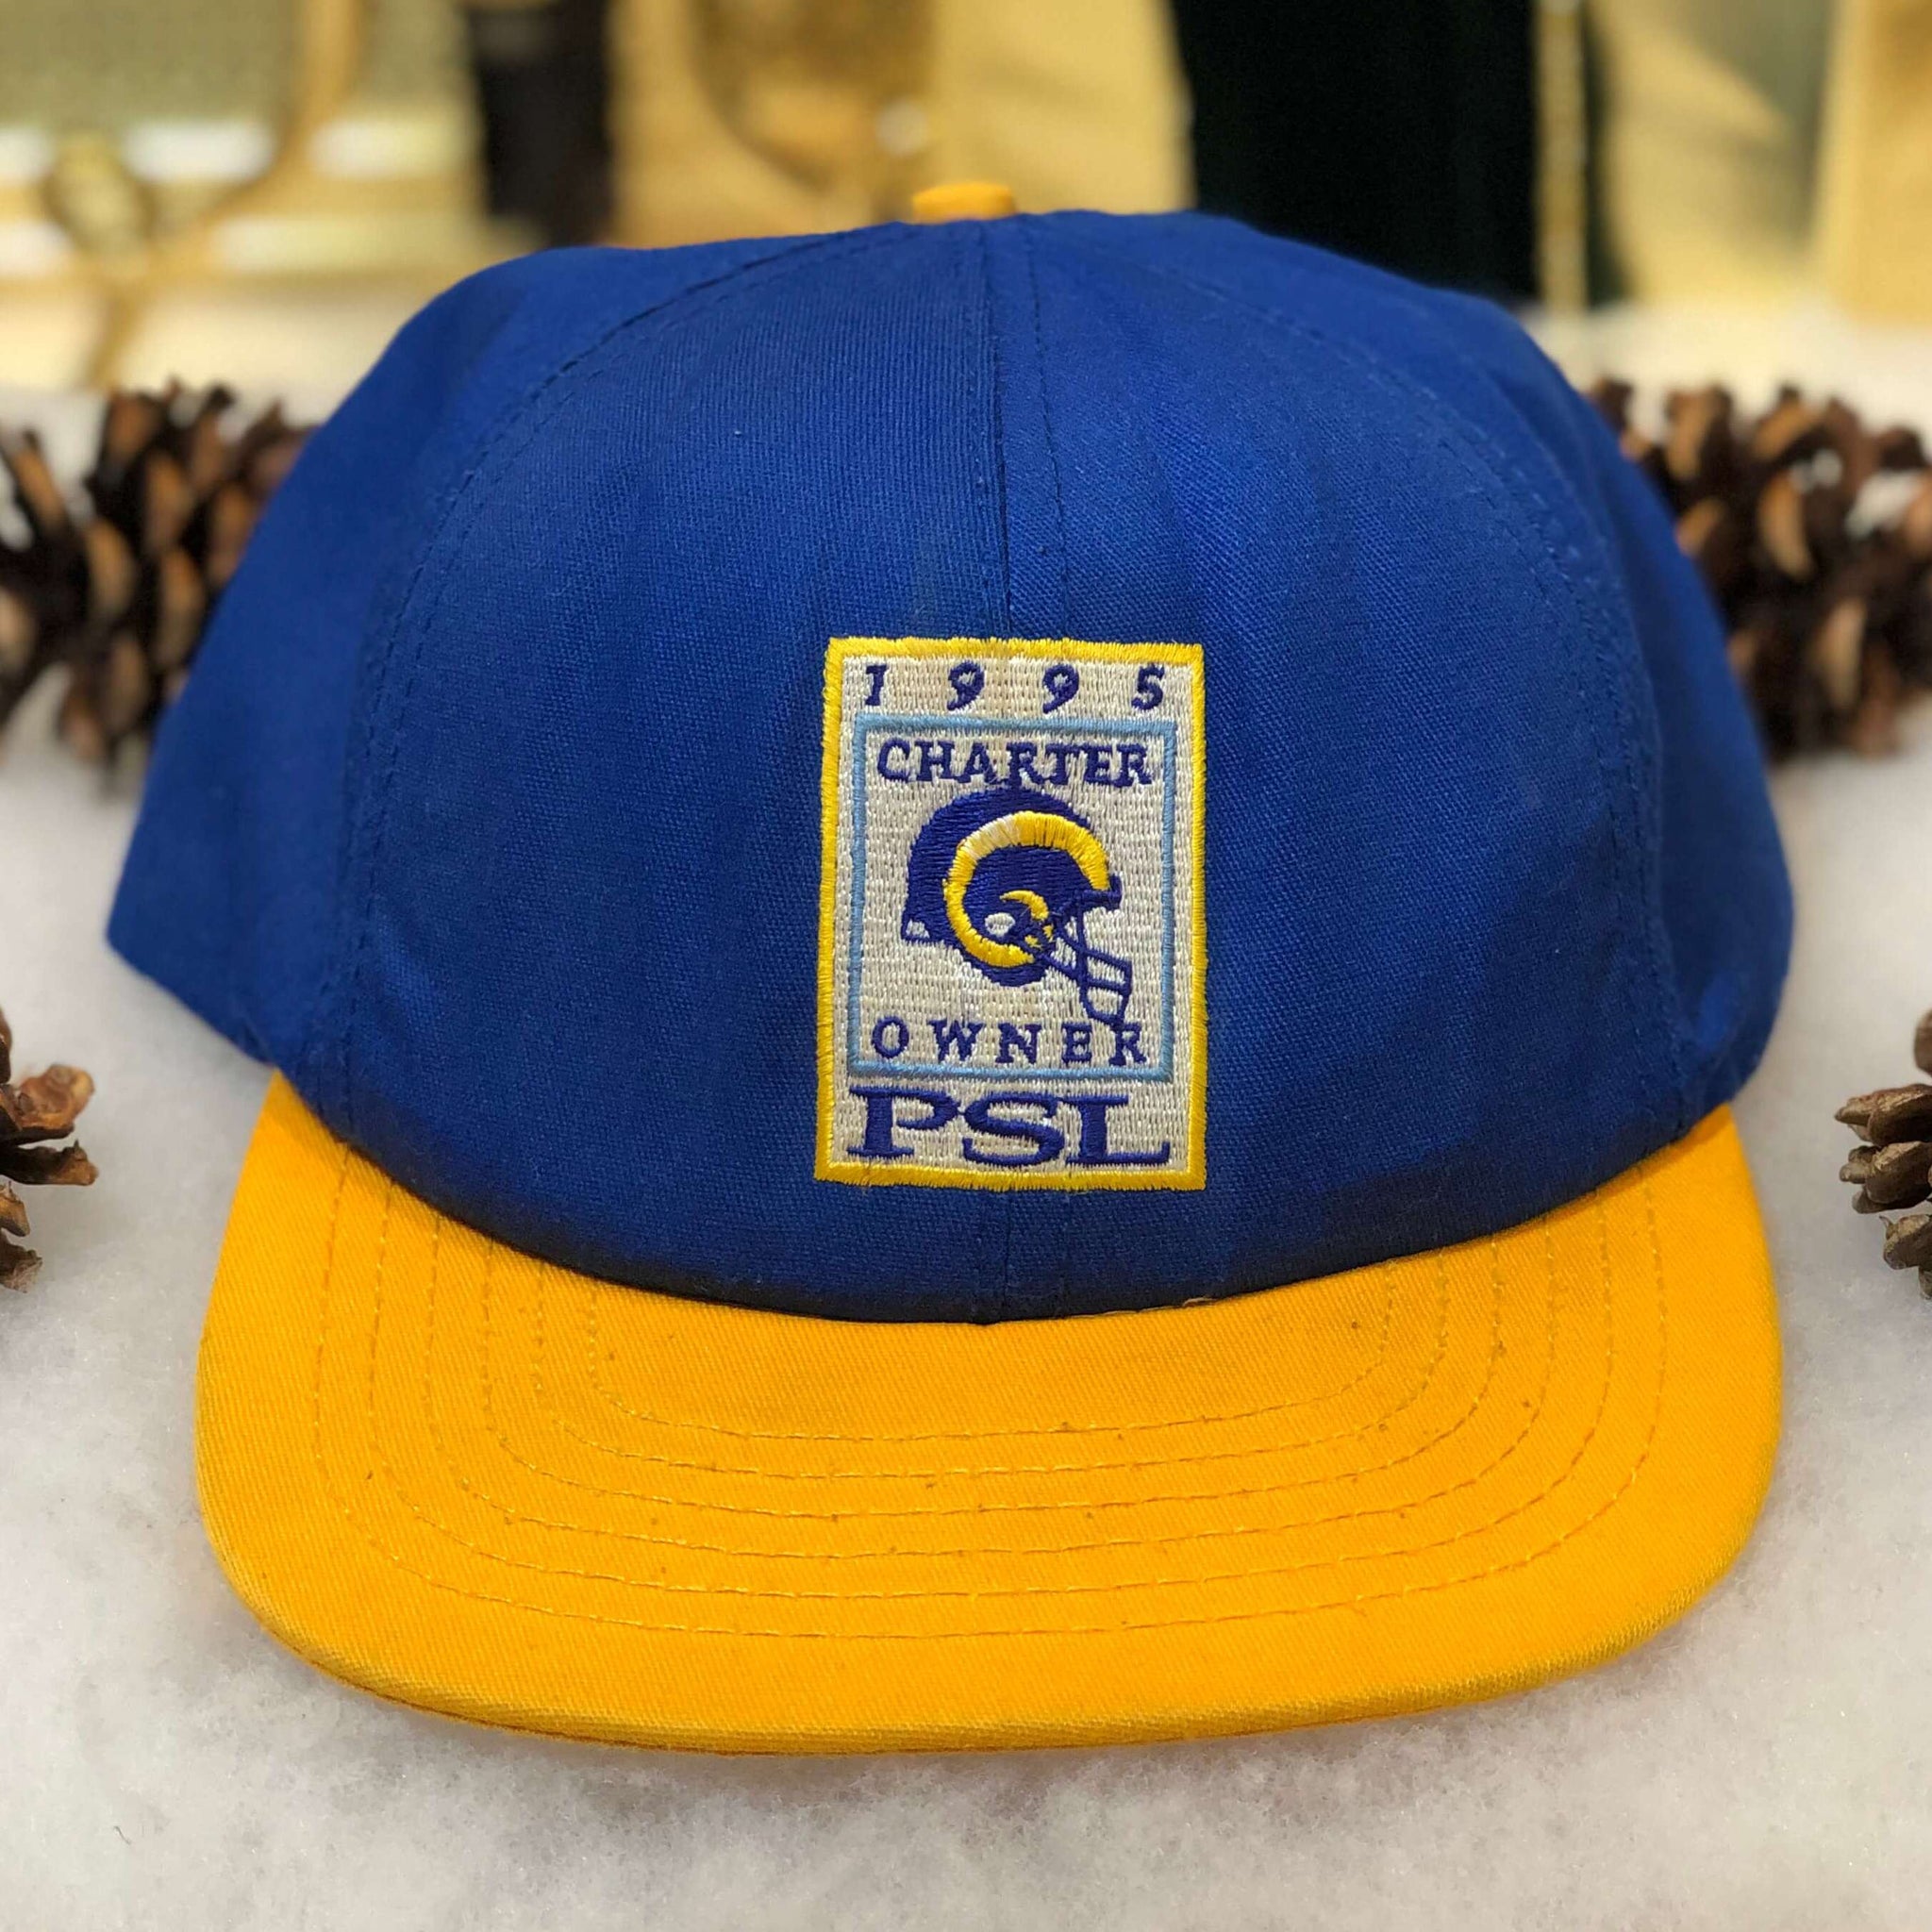 Vintage 1995 NFL St. Louis Rams Charter Owner PSL Stretch Fit Hat